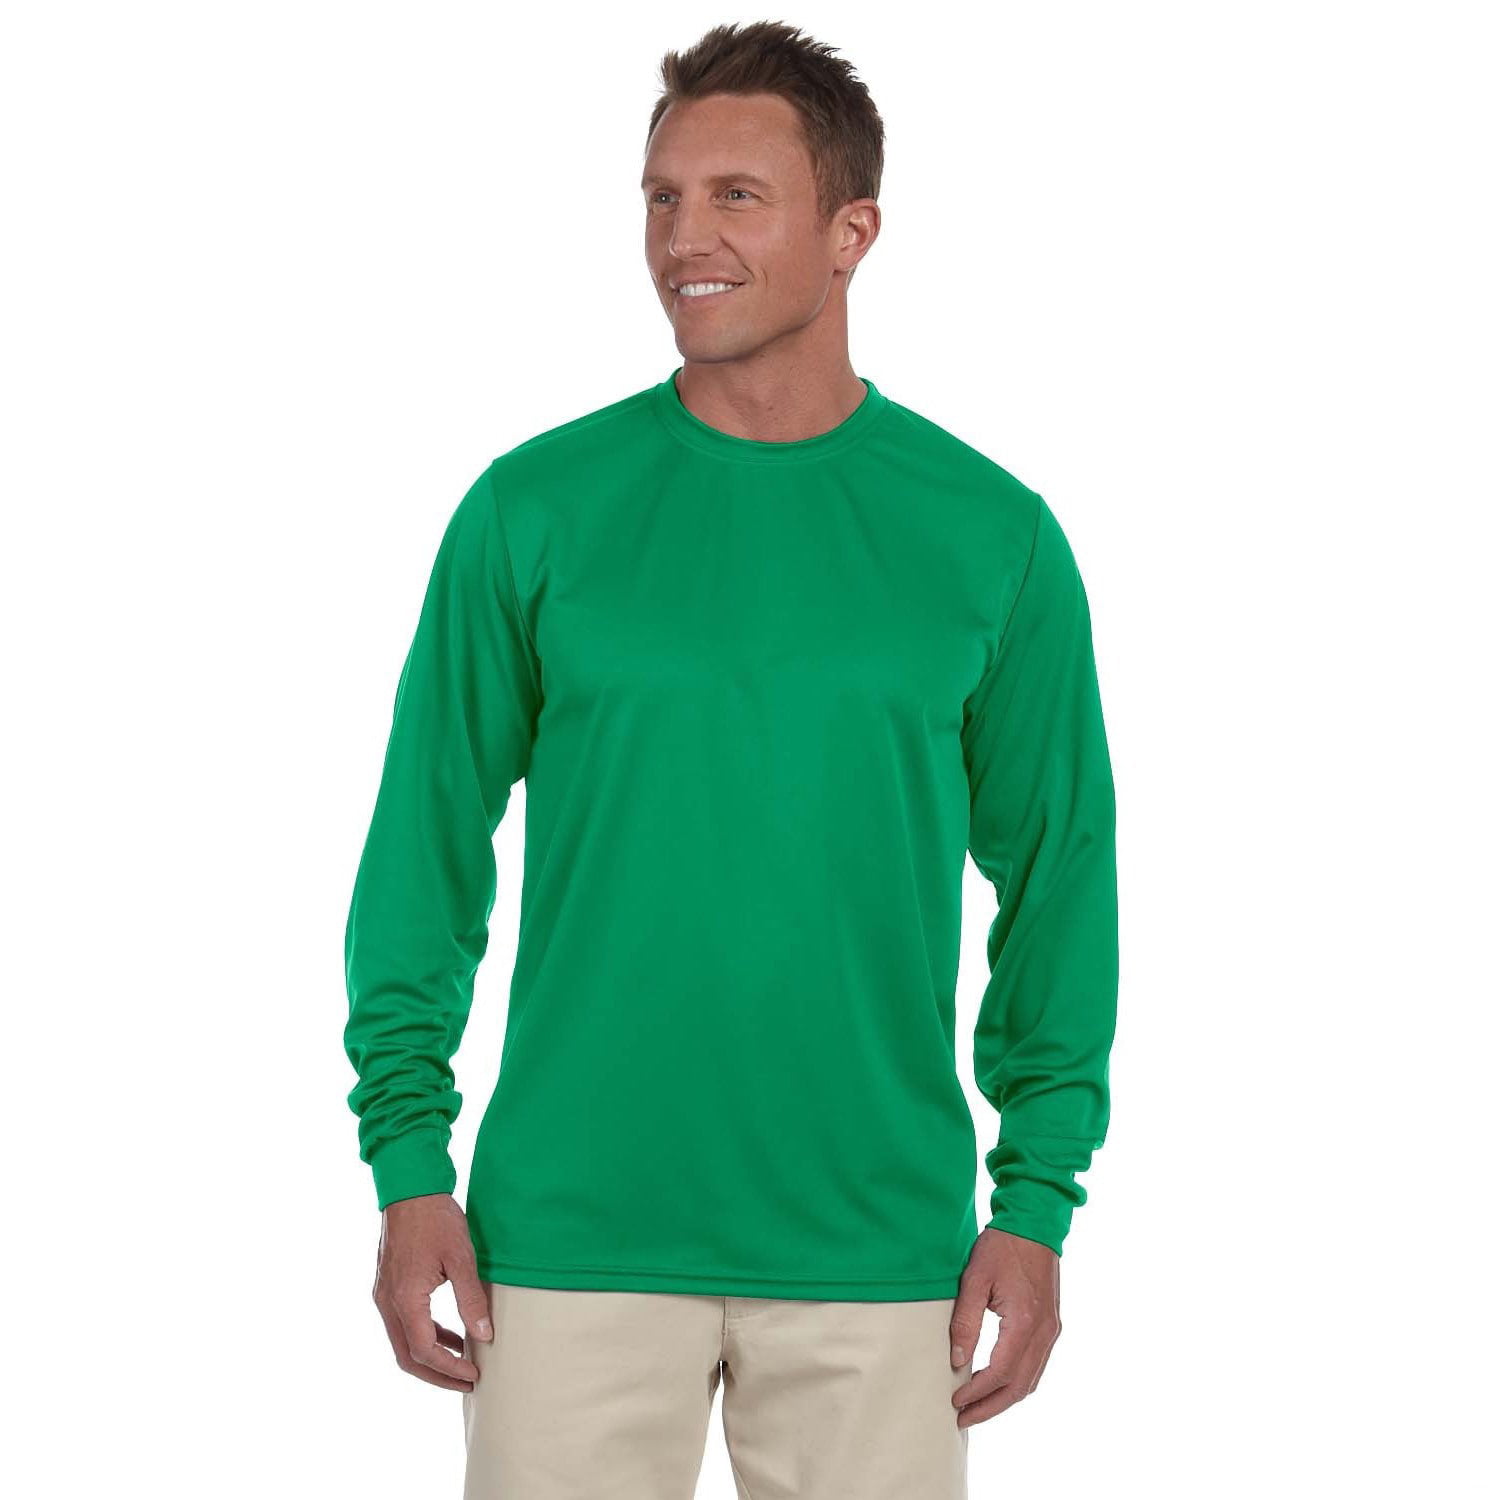 Polyester Skin Tight Full Sleeve T-Shirt - Versatile Active Wear For All  Seasons